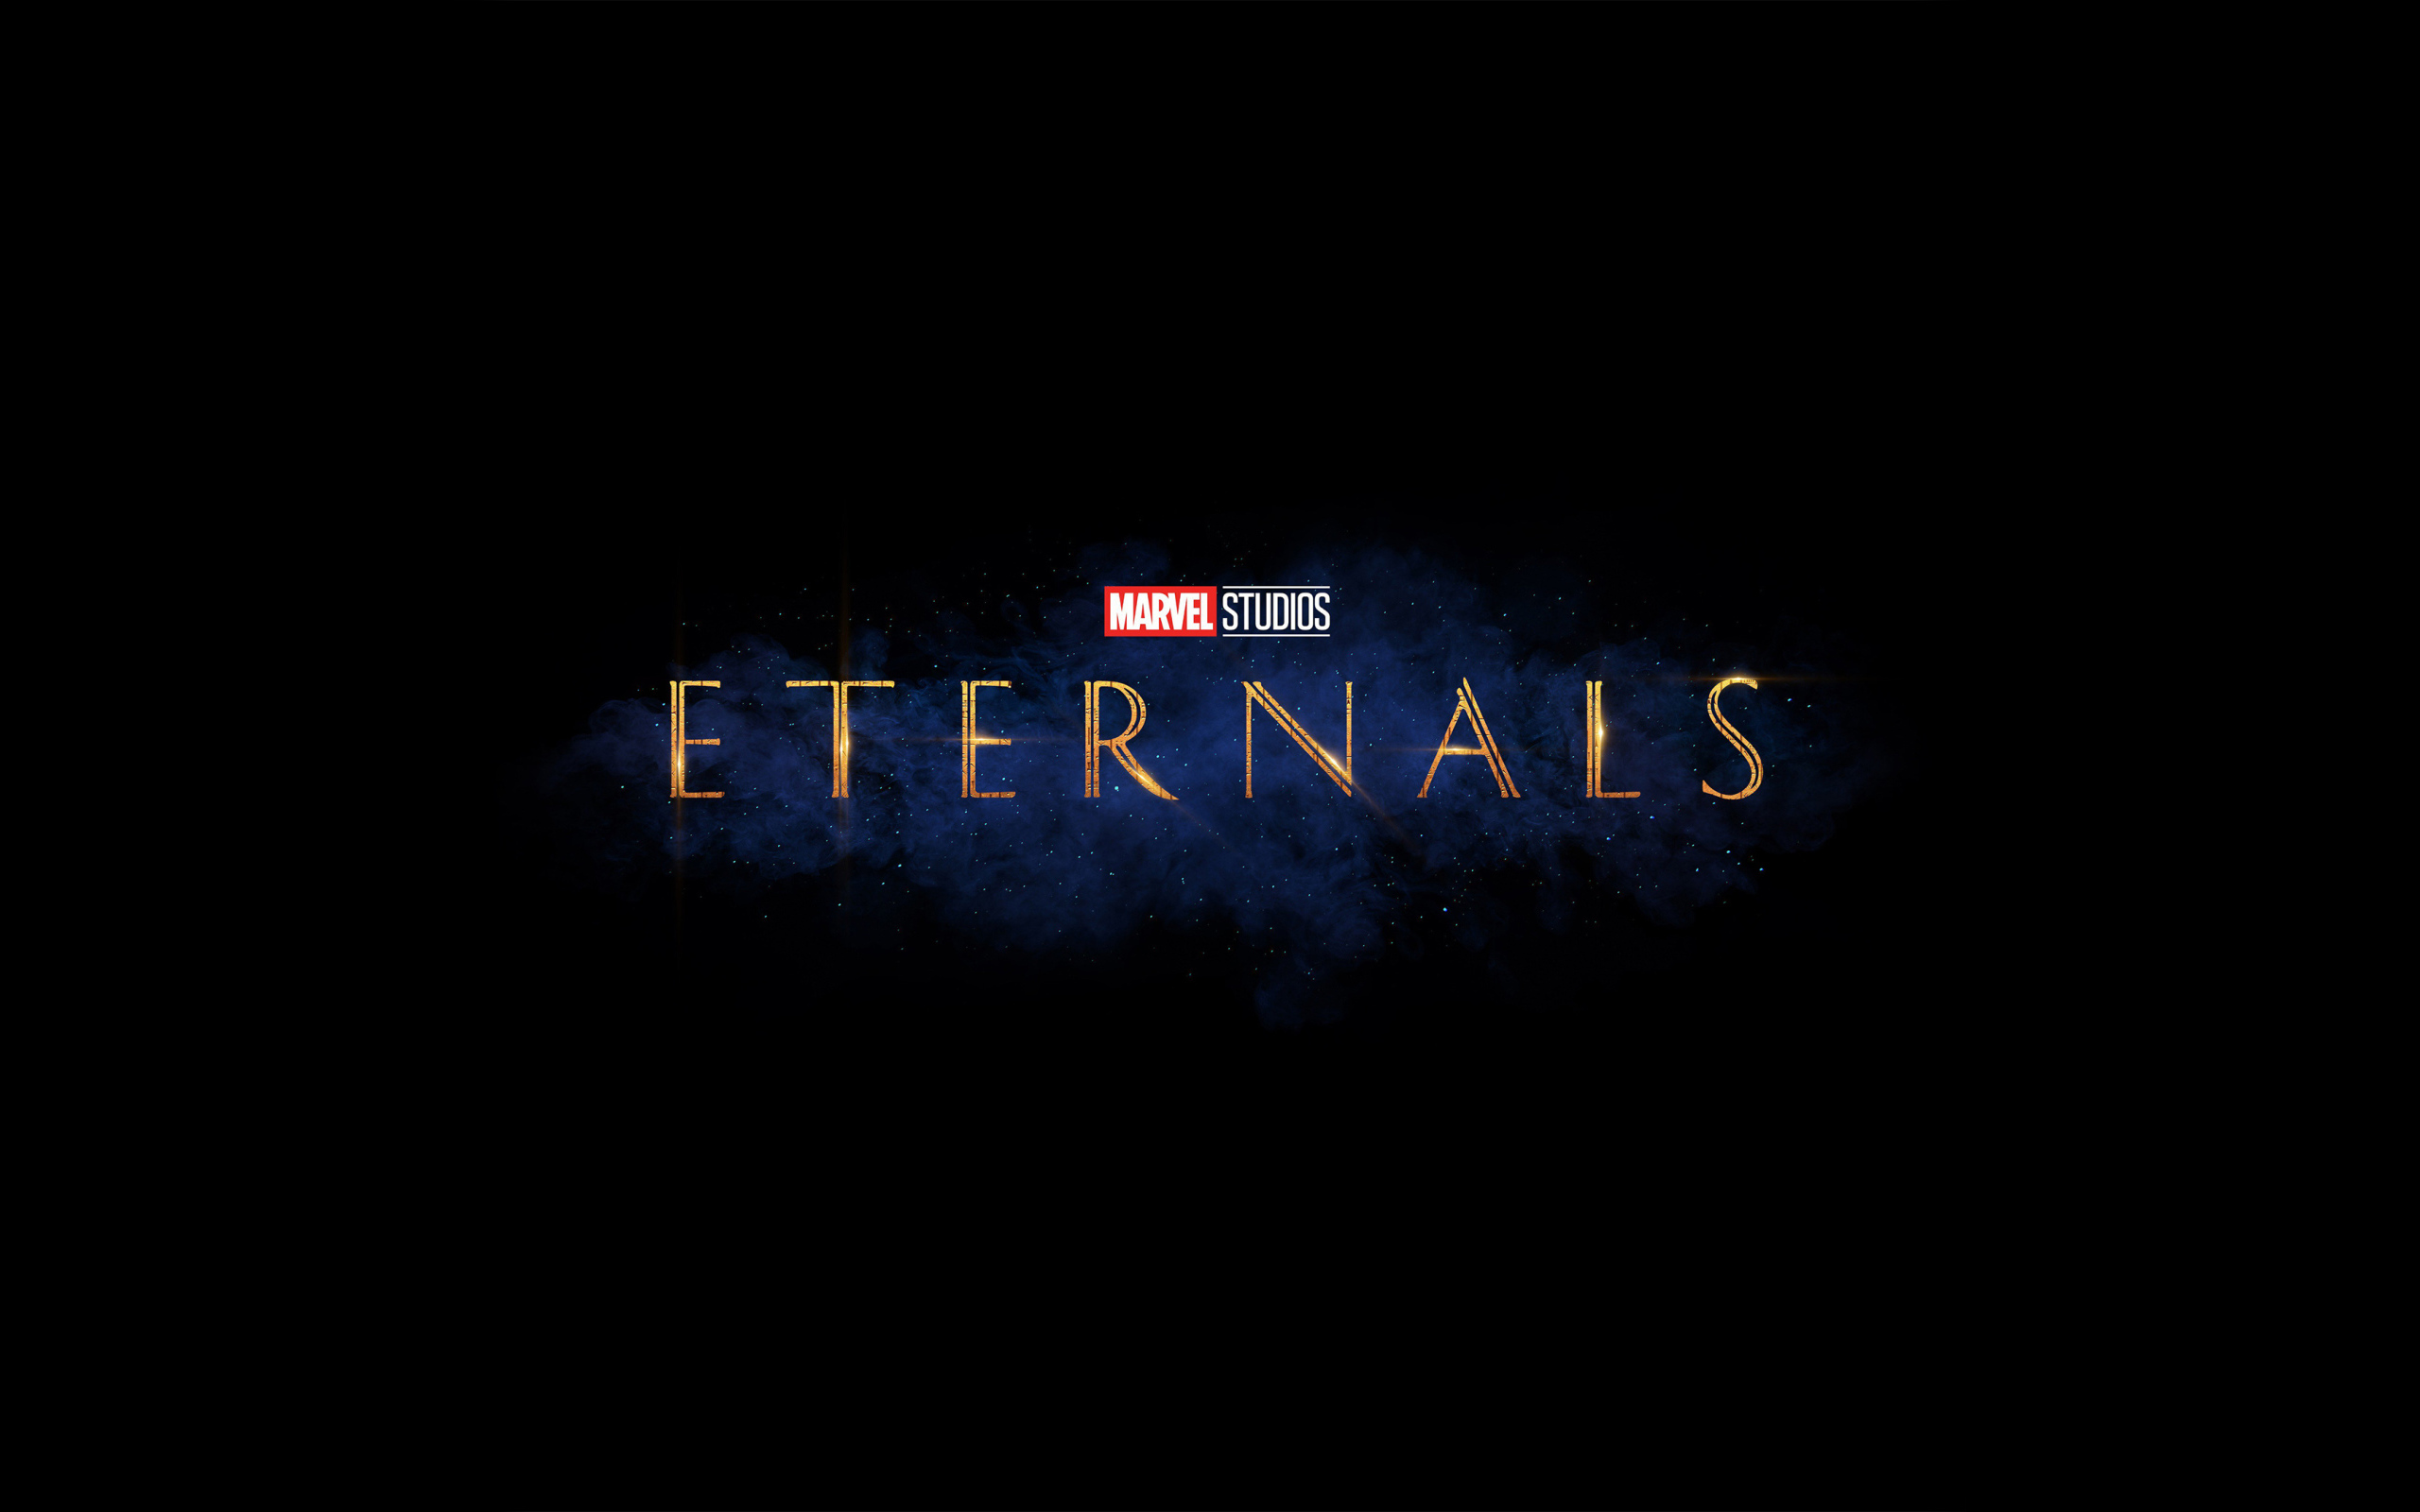 Poster for the new Marvel Eternal movie, 2020